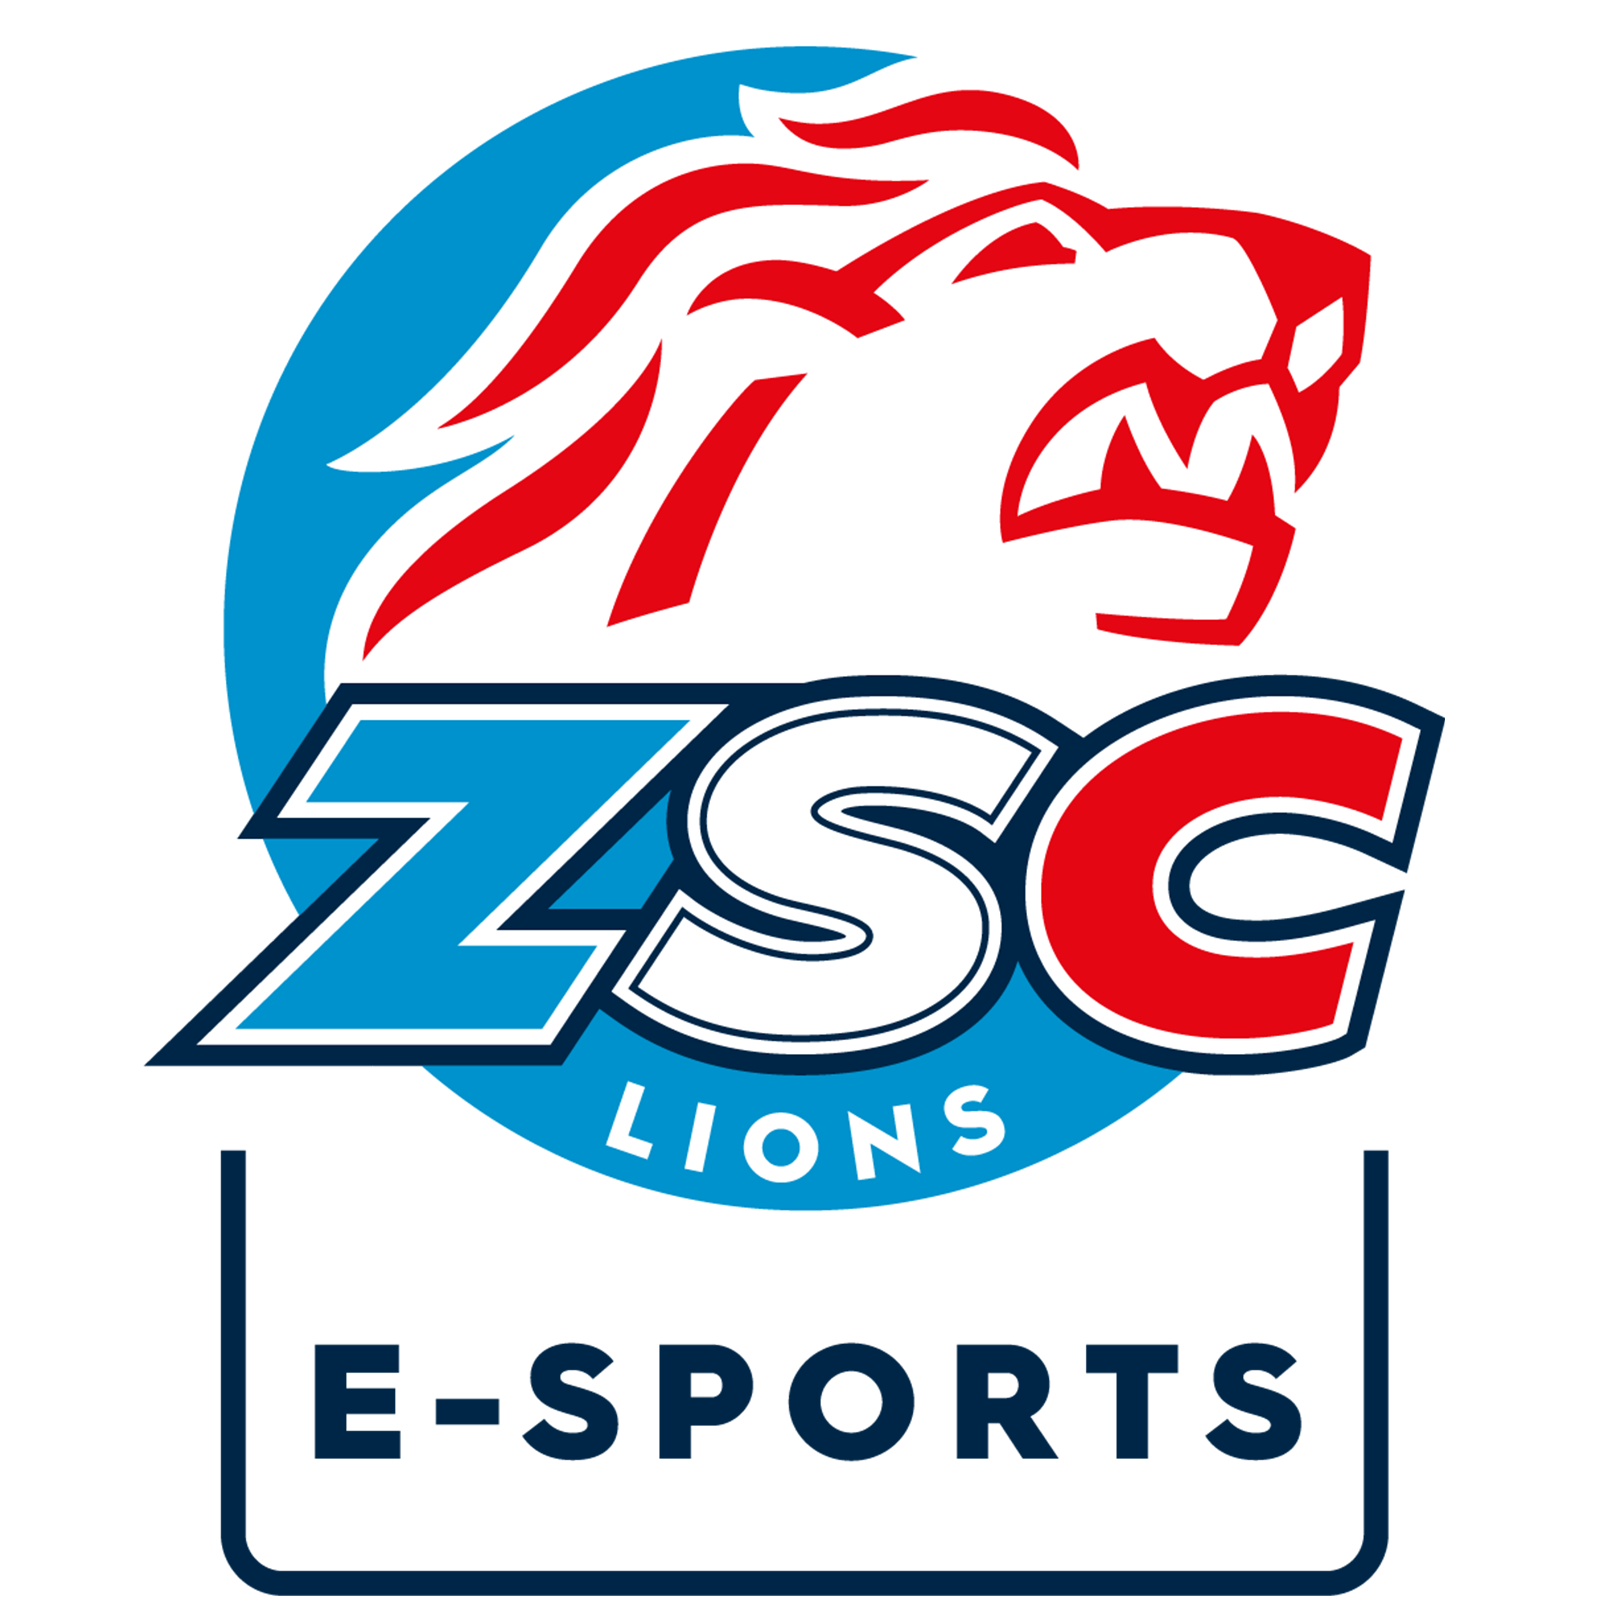 ZSC Esports